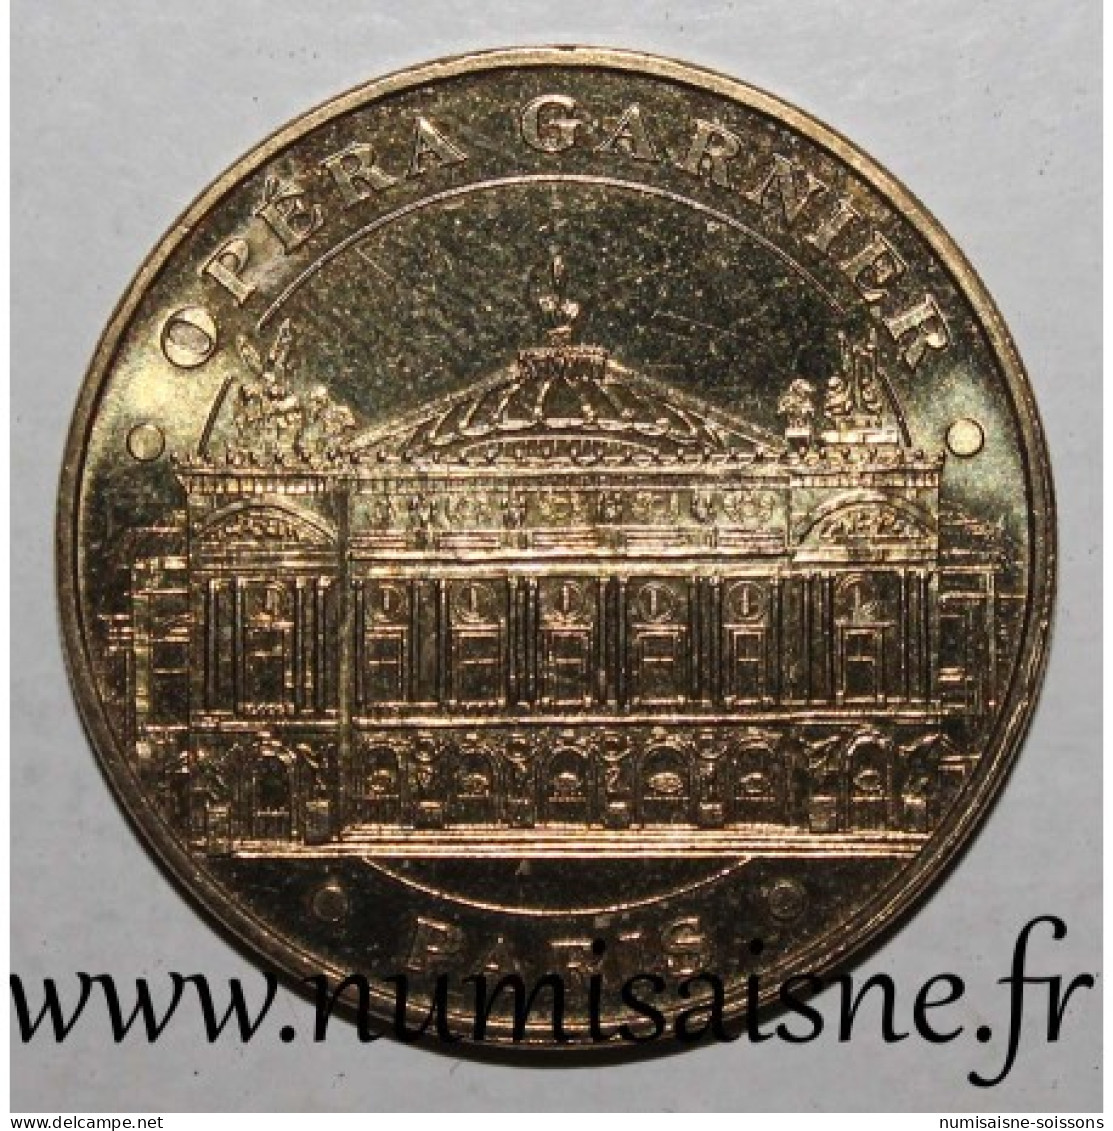 75 - PARIS - OPÉRA GARNIER - Monnaie De Paris - 2012 - 2012